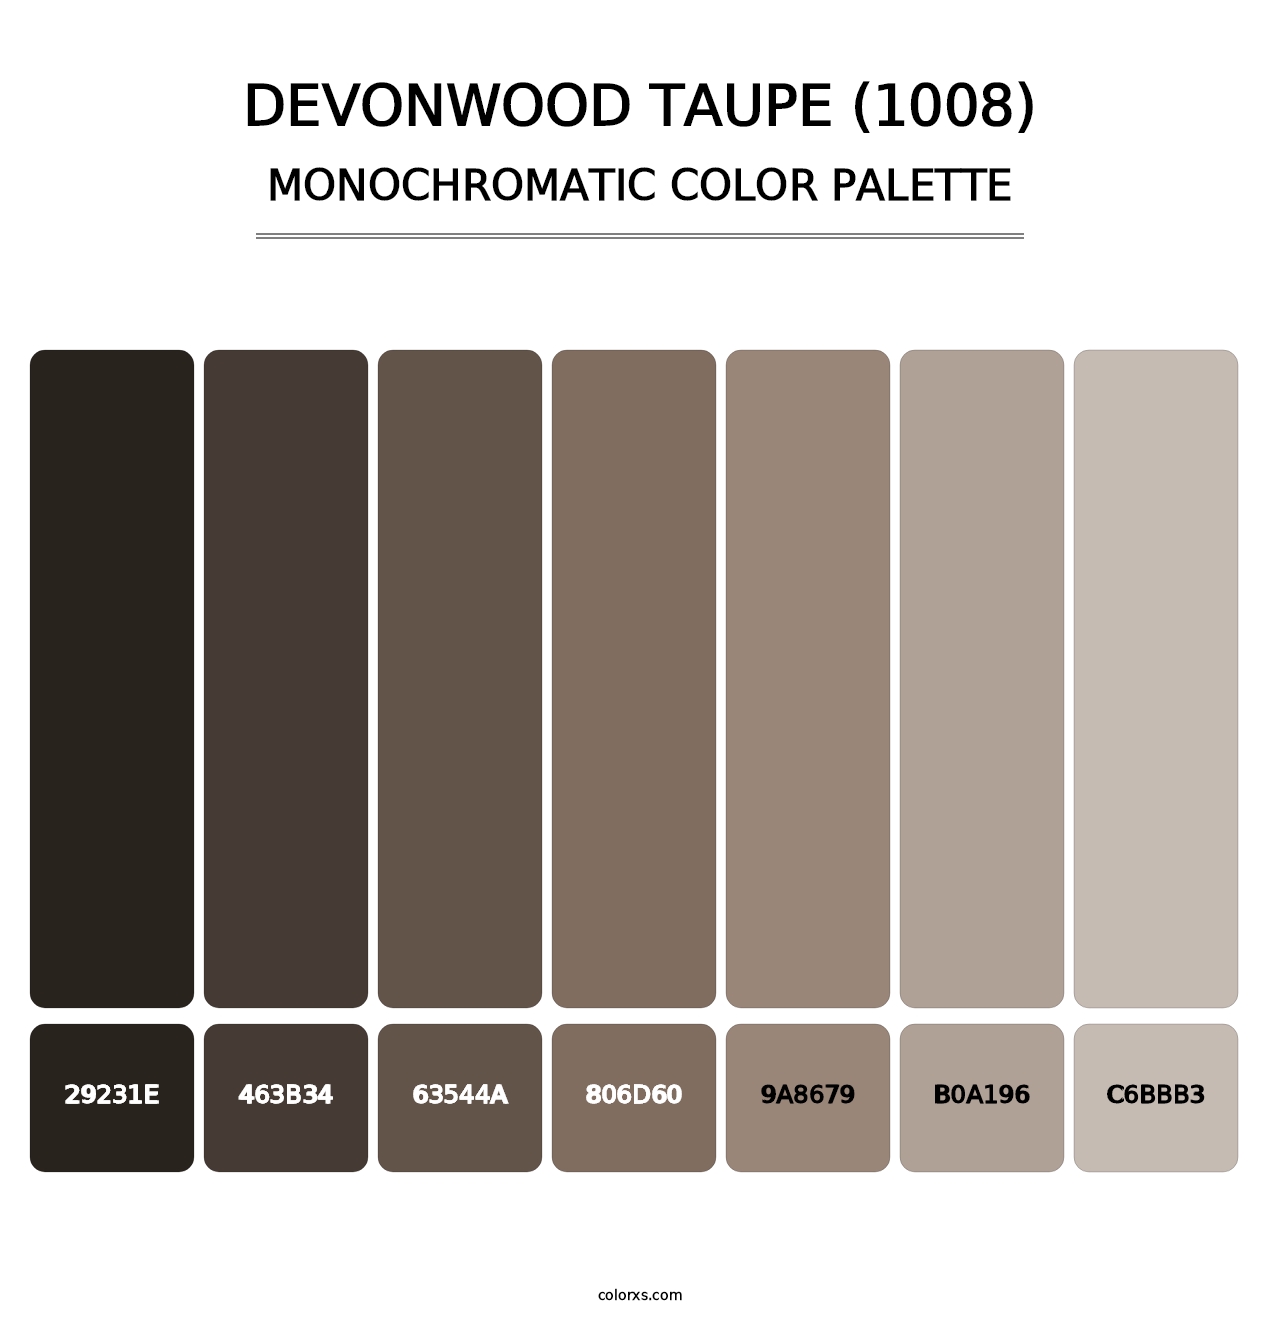 Devonwood Taupe (1008) - Monochromatic Color Palette